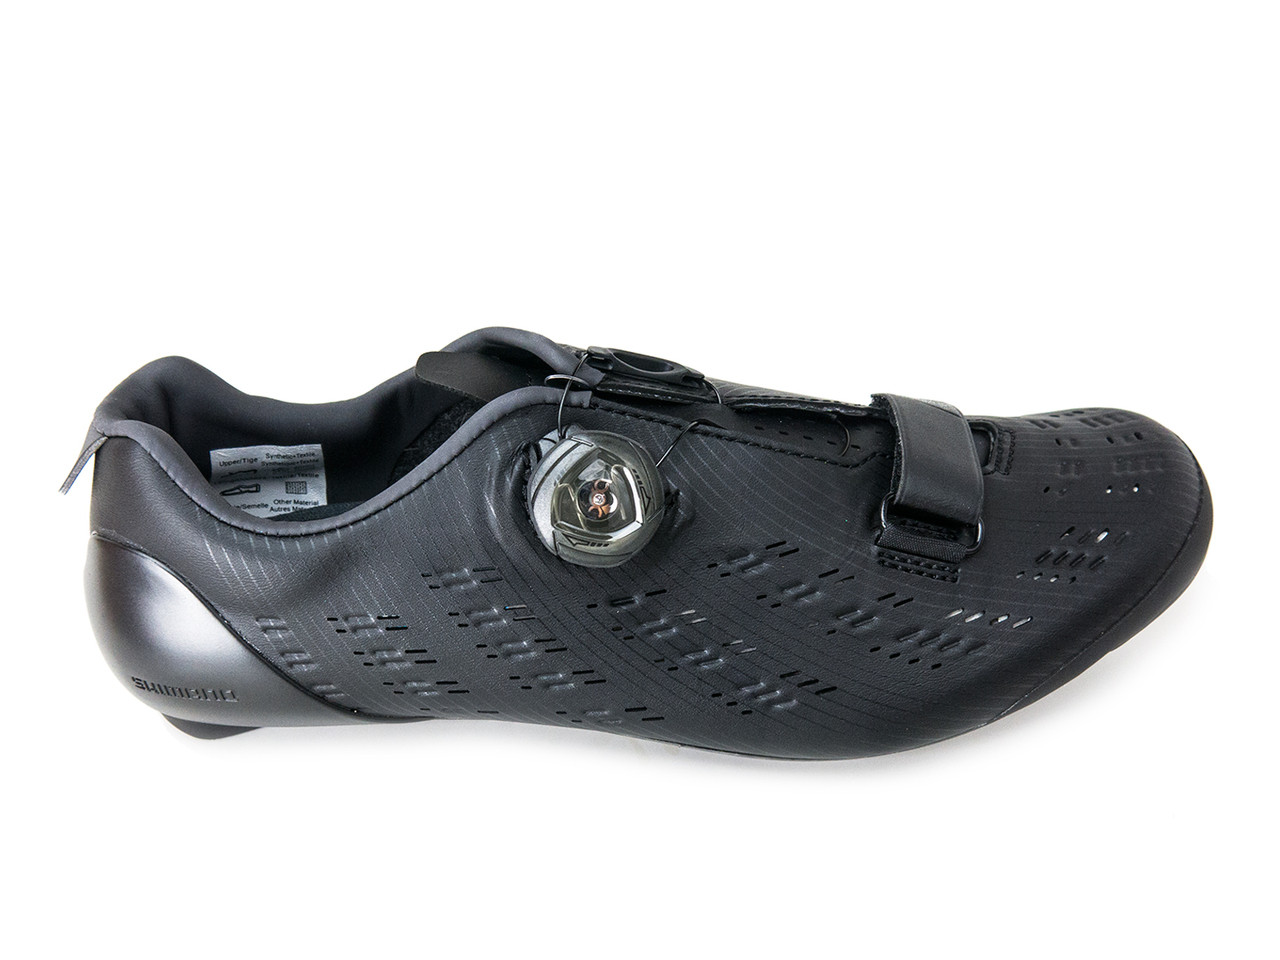 shimano rp901 spd road shoe